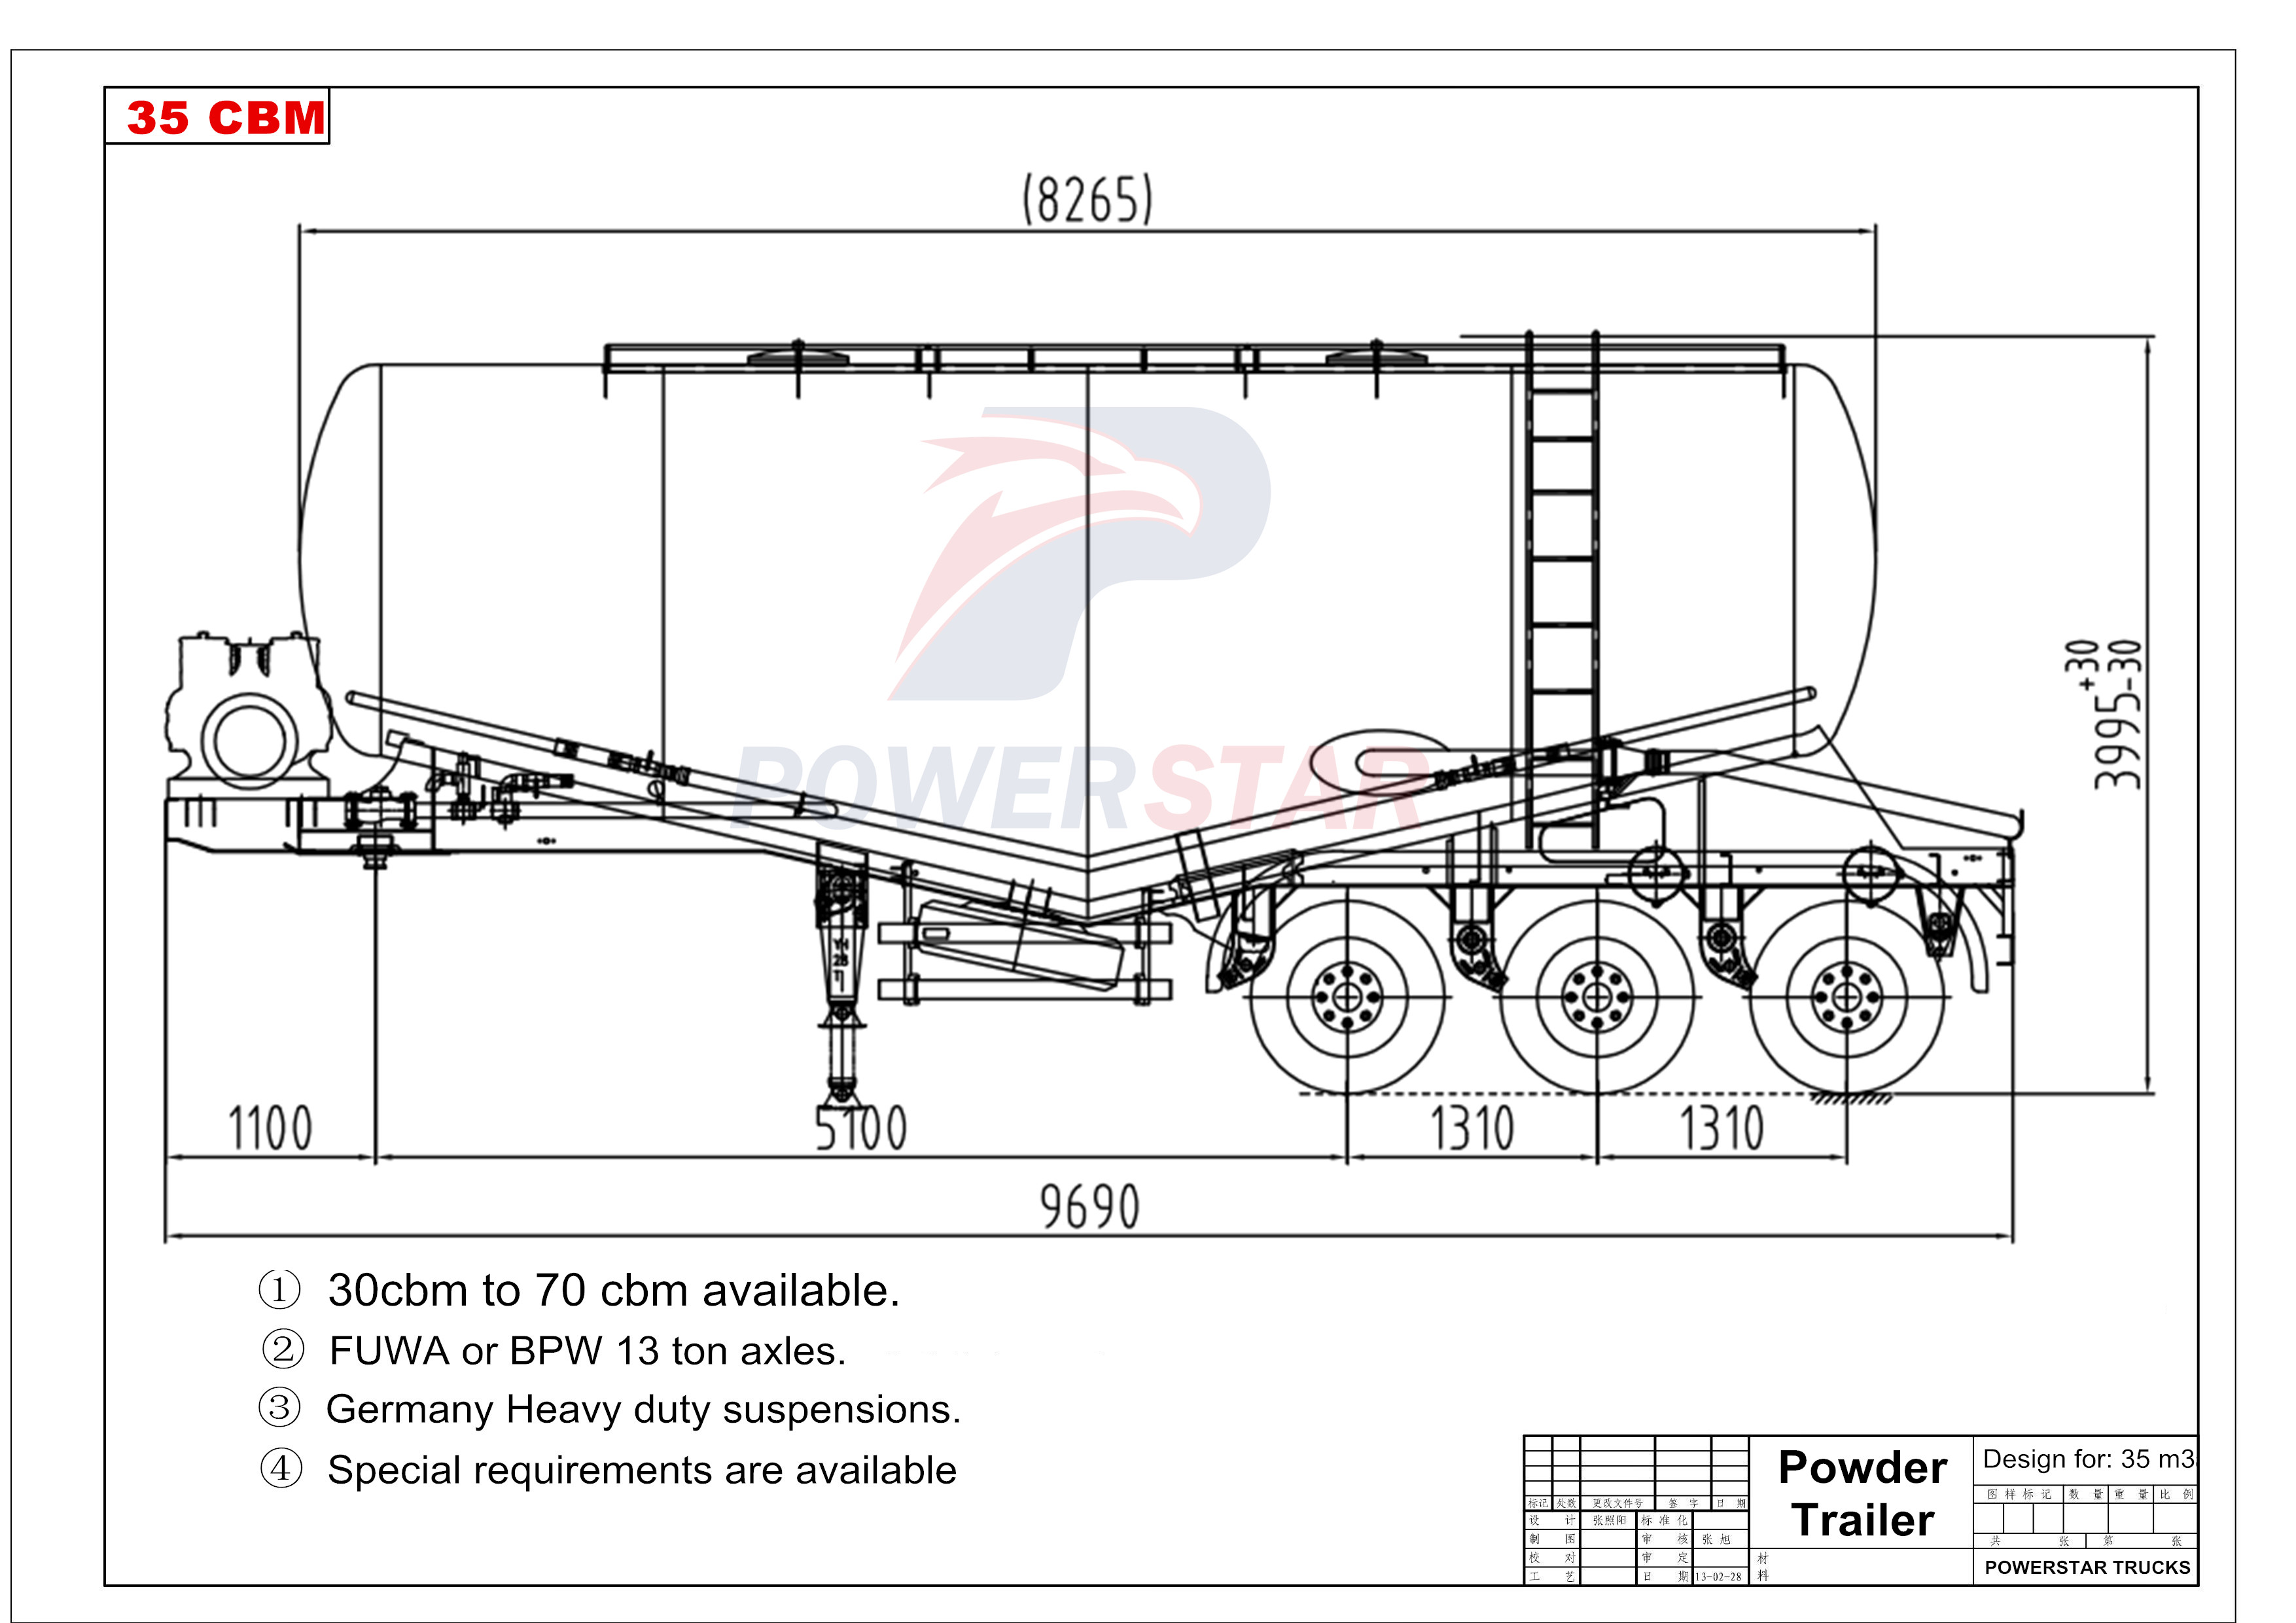 Technical drawing for 35cbm bulk cement powder tank semi trailer